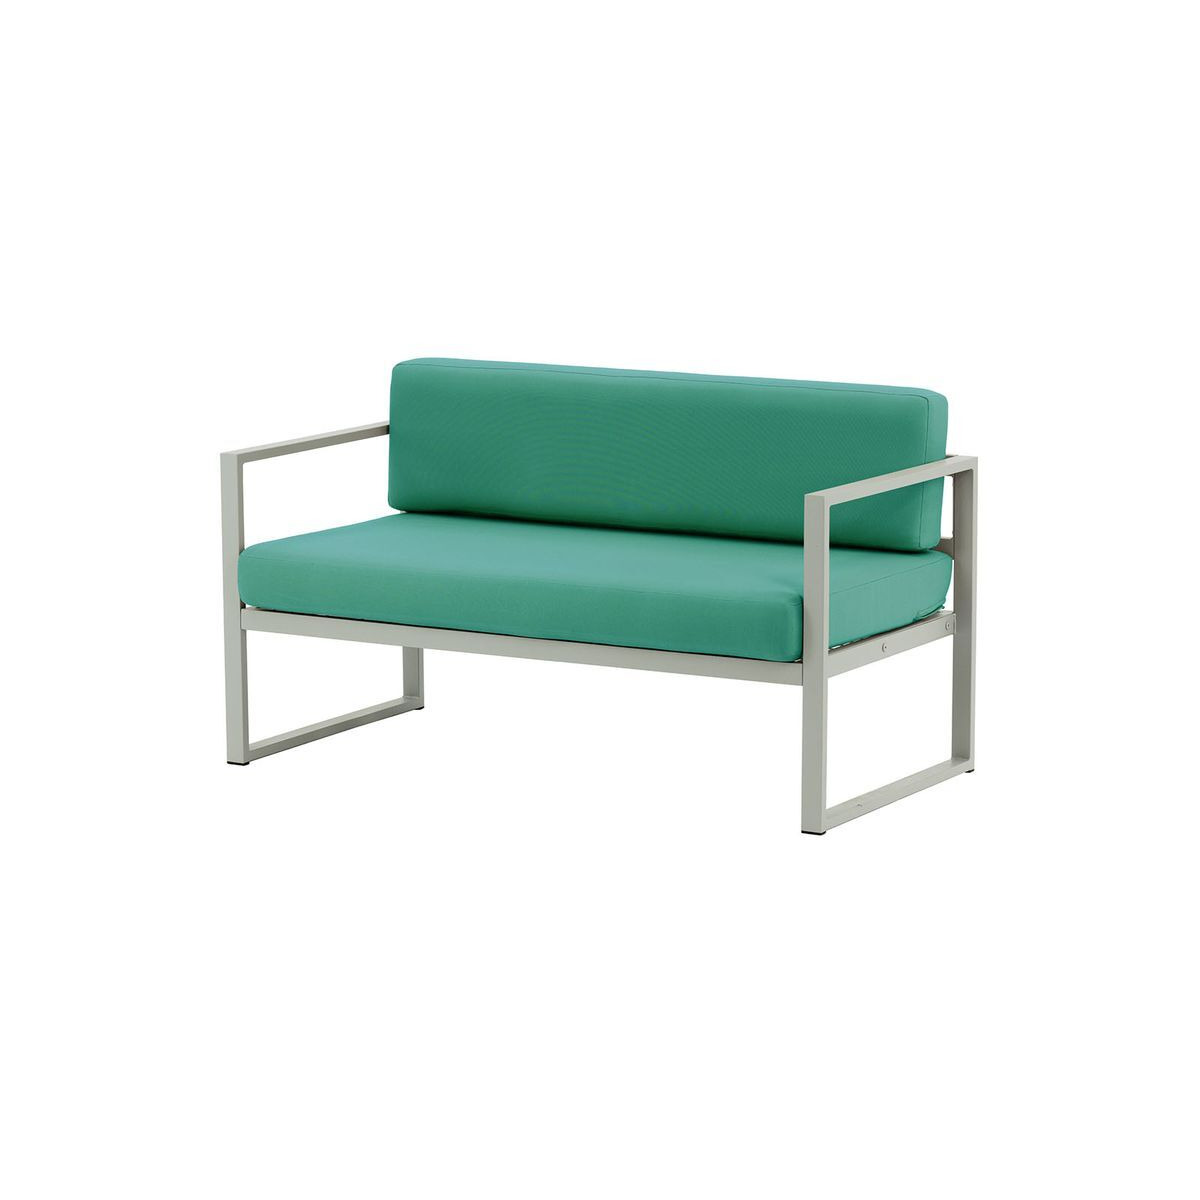 Sunset Garden 2 Seater Sofa, turquoise, Leg colour: grey steel - image 1